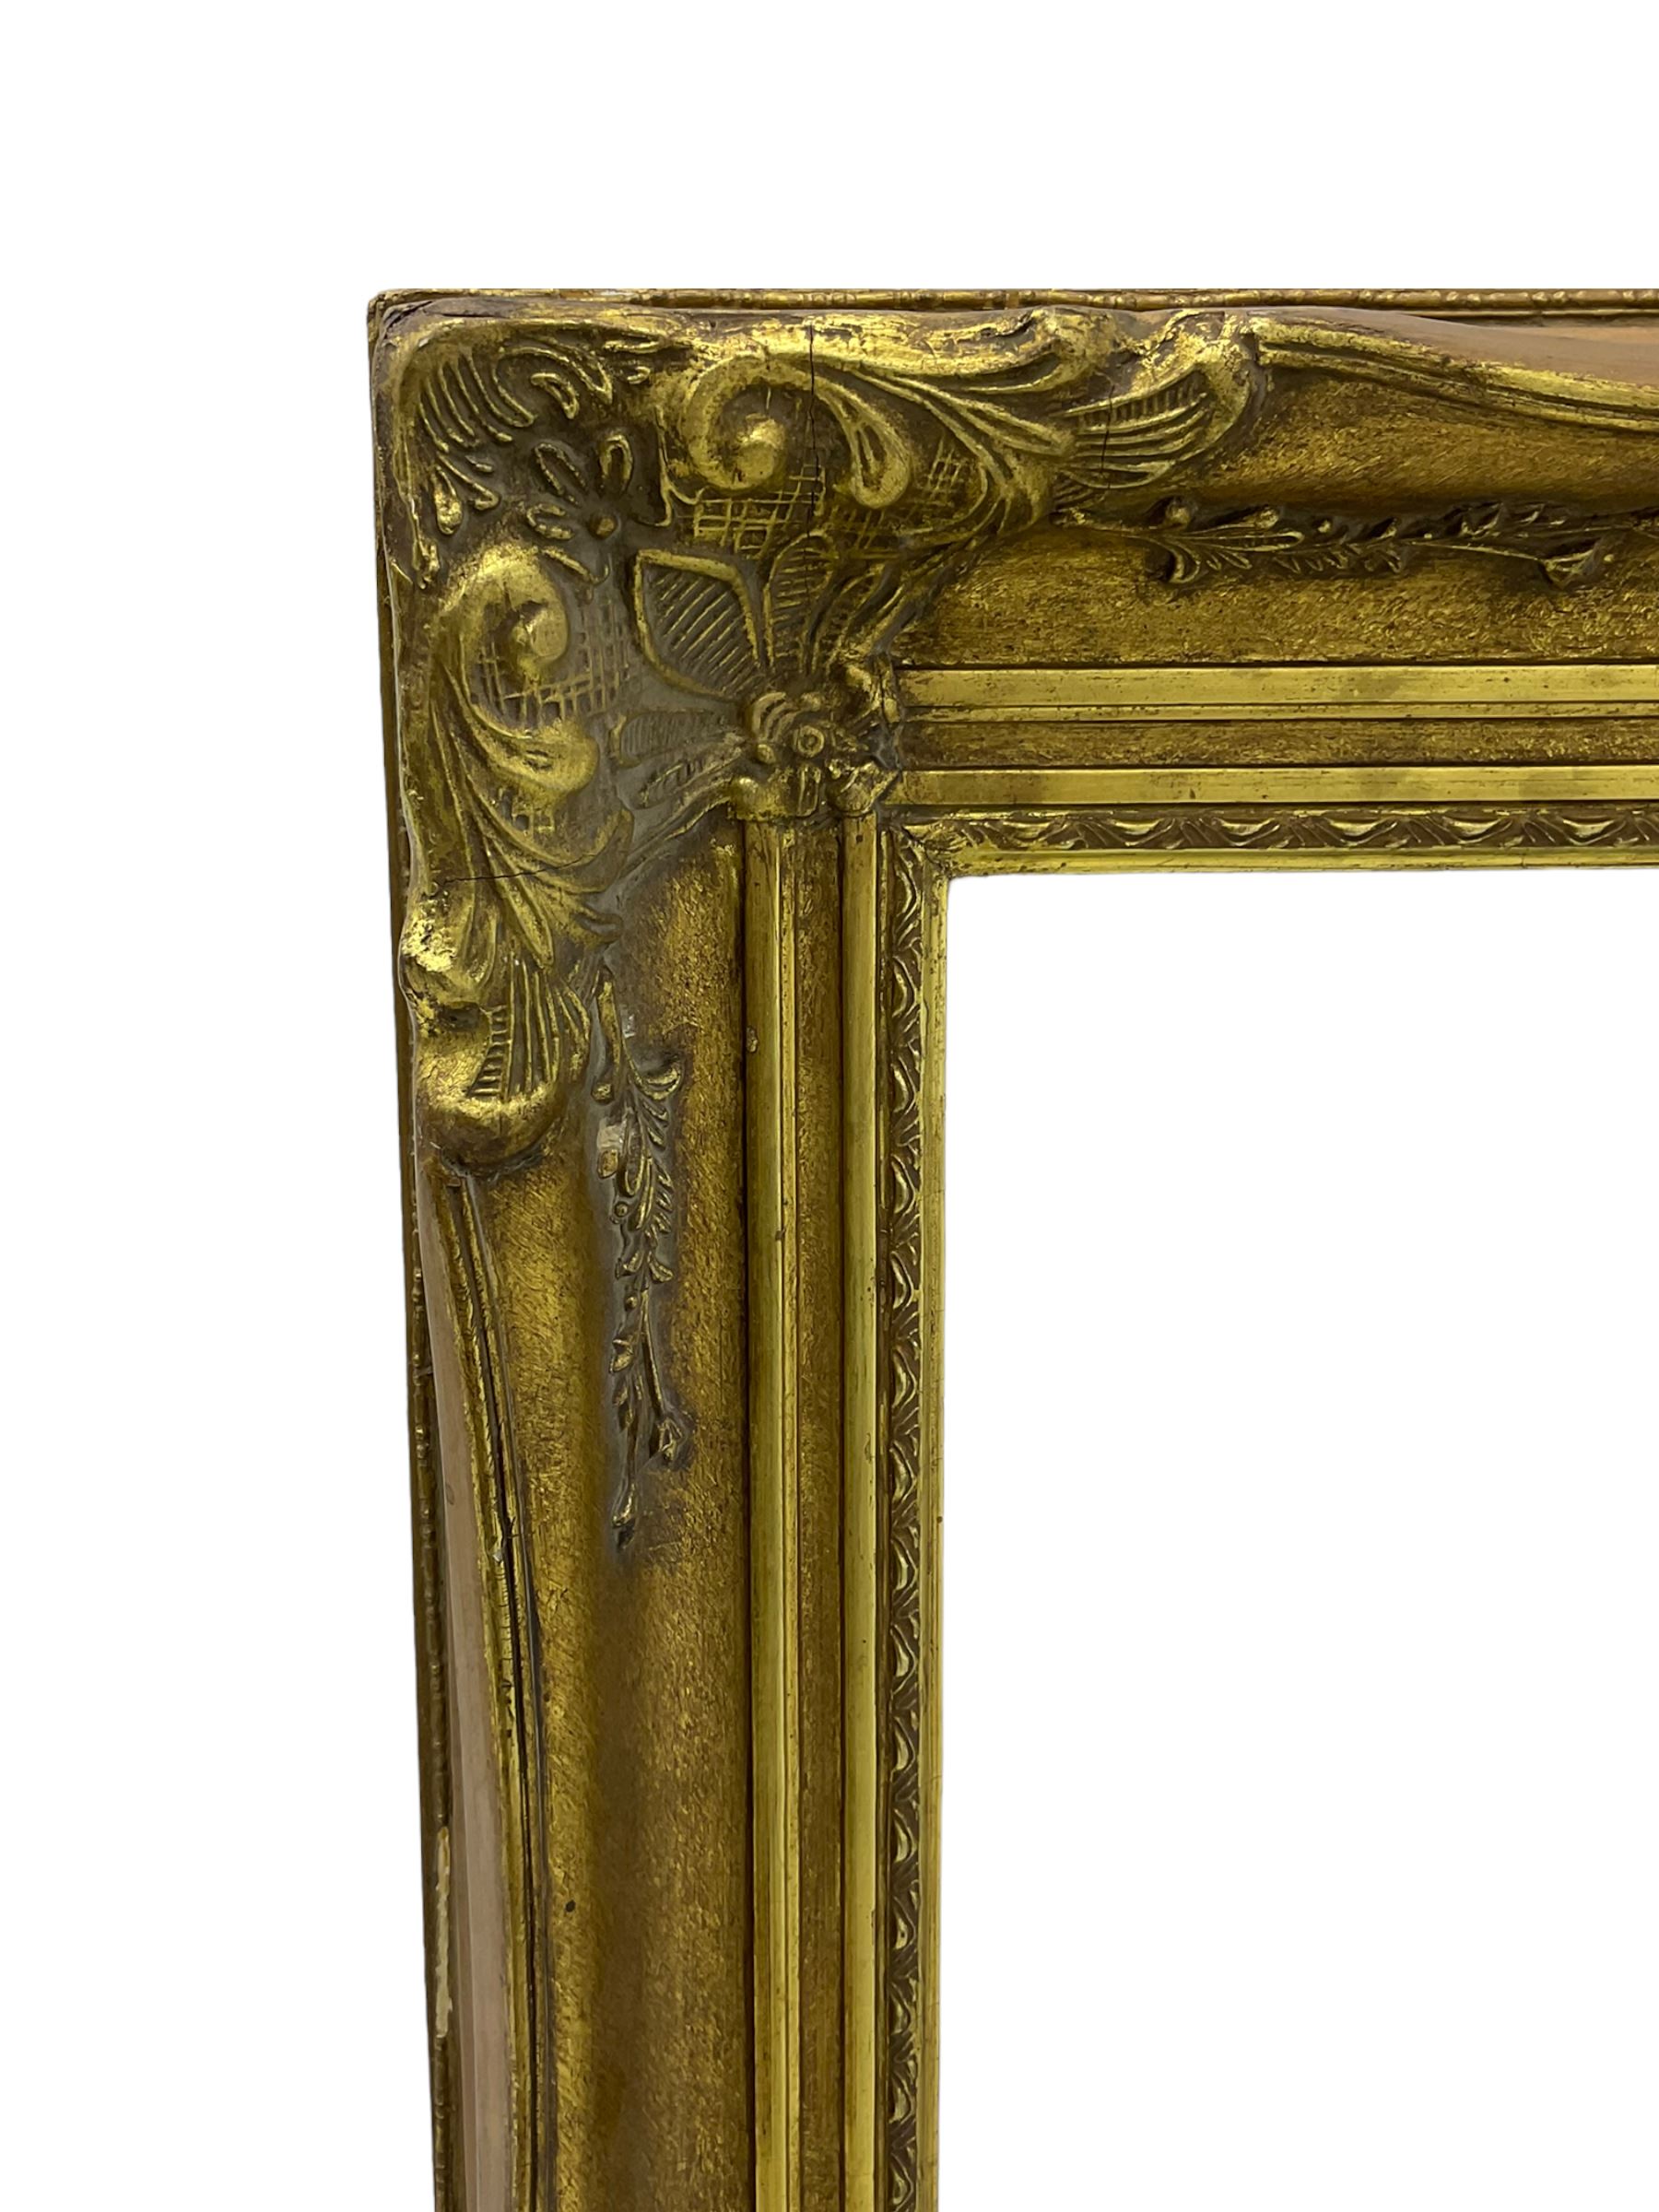 Rectangular wall mirror in gilt swept frame - Image 2 of 3